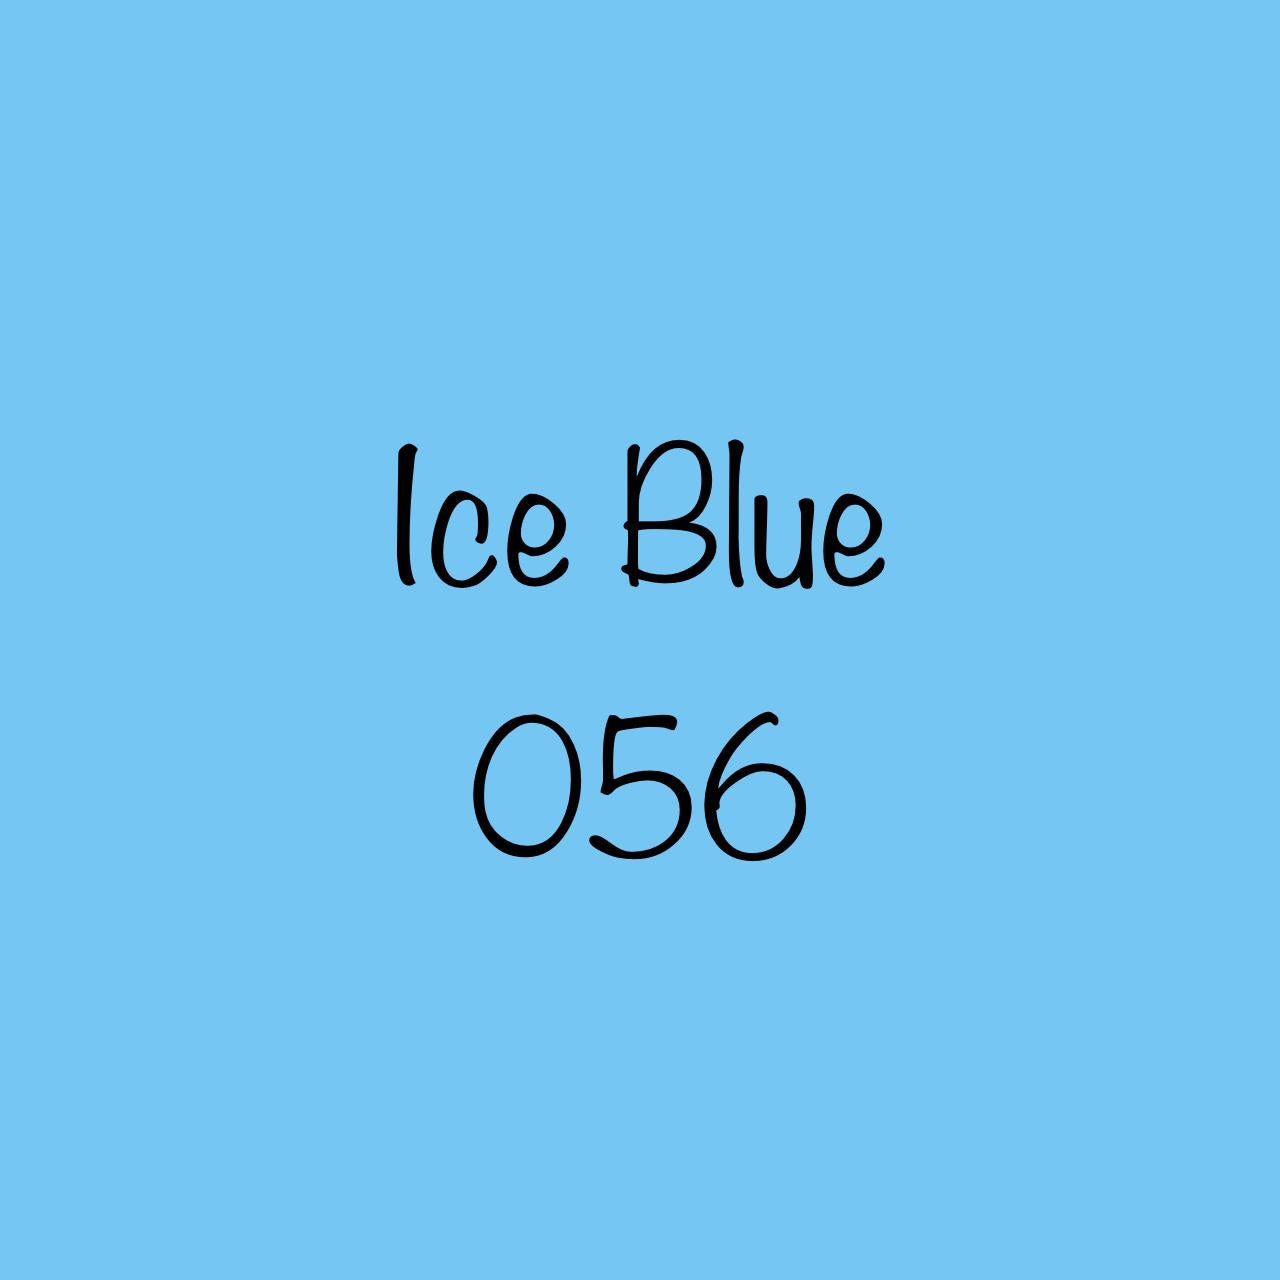 ORACAL 651 Permanent Vinyl, Ice Blue